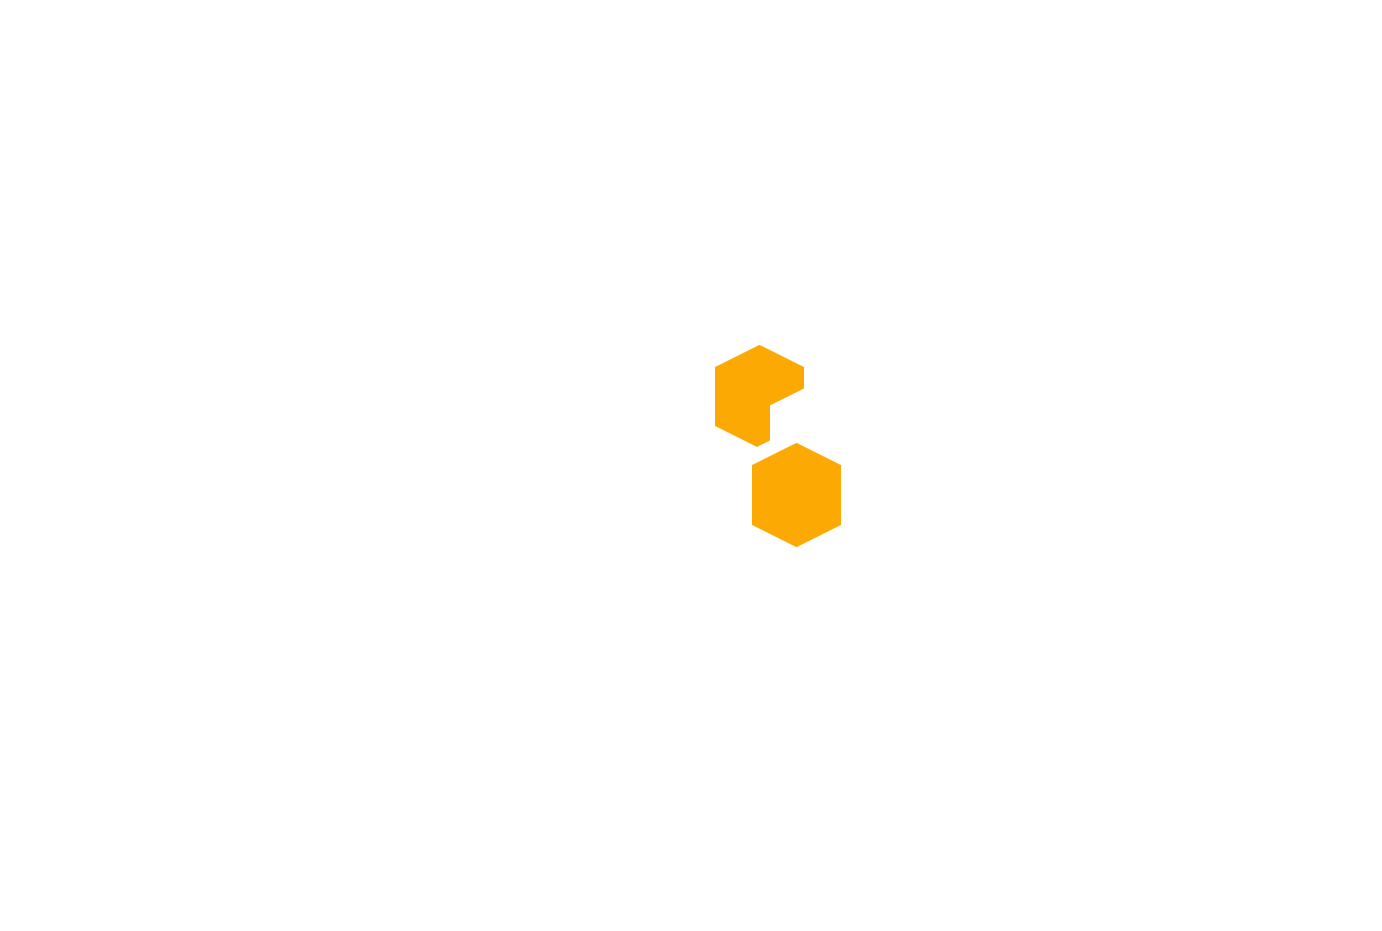 Hachisuka Lab